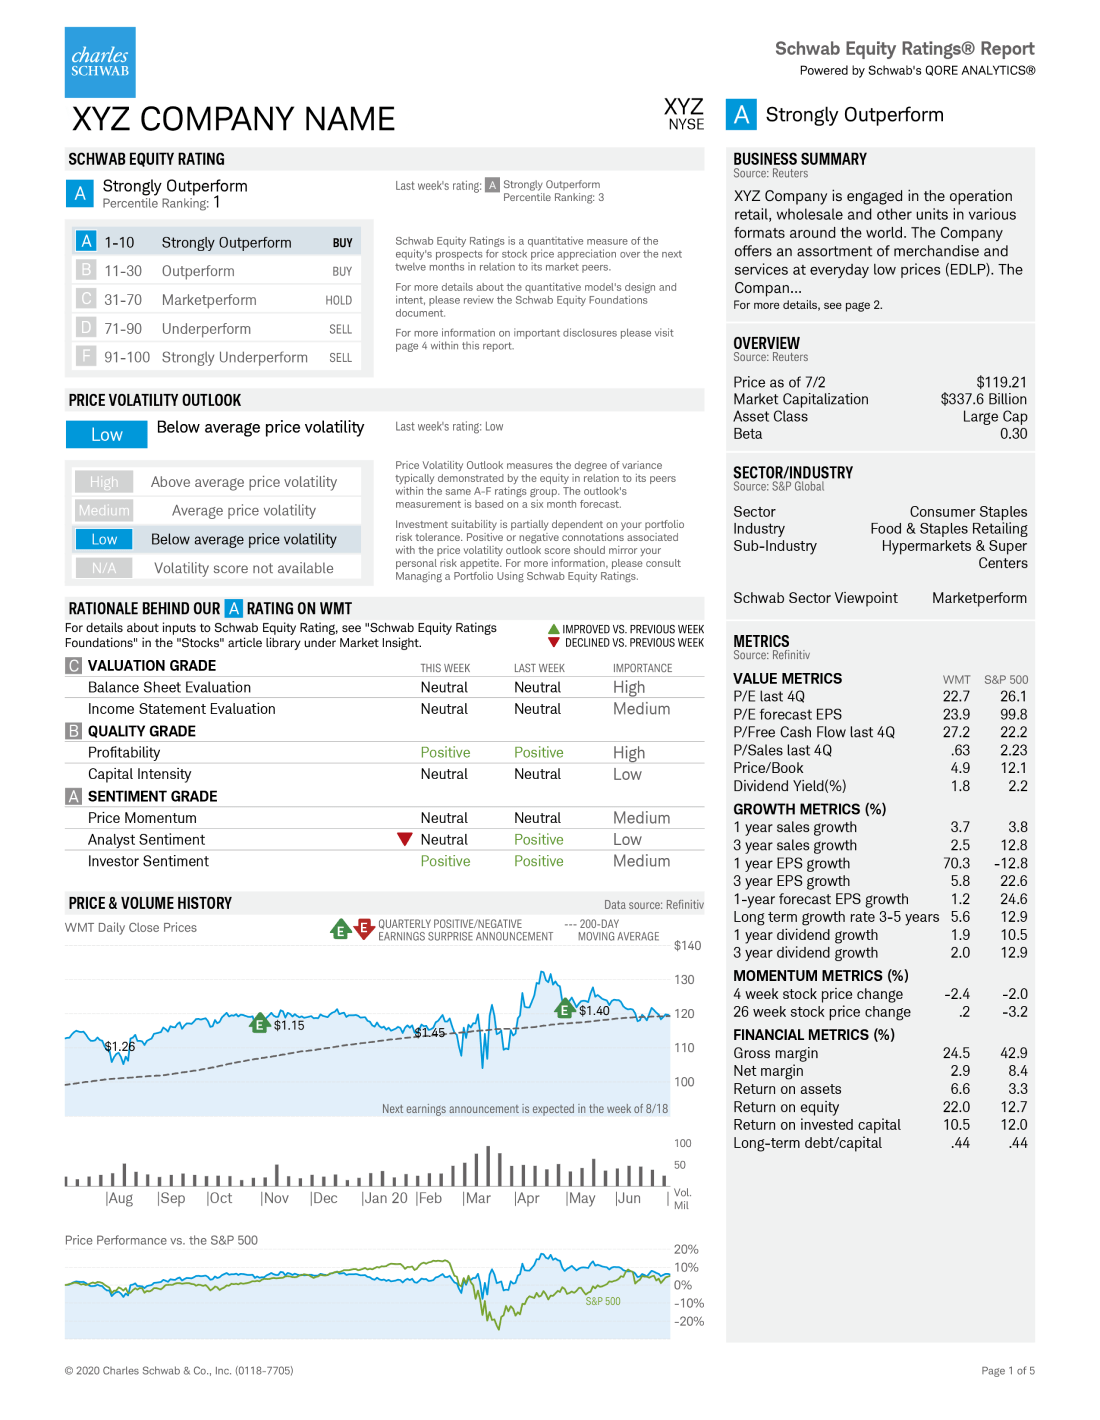 A screenshot of a Schwab equity ratings report.